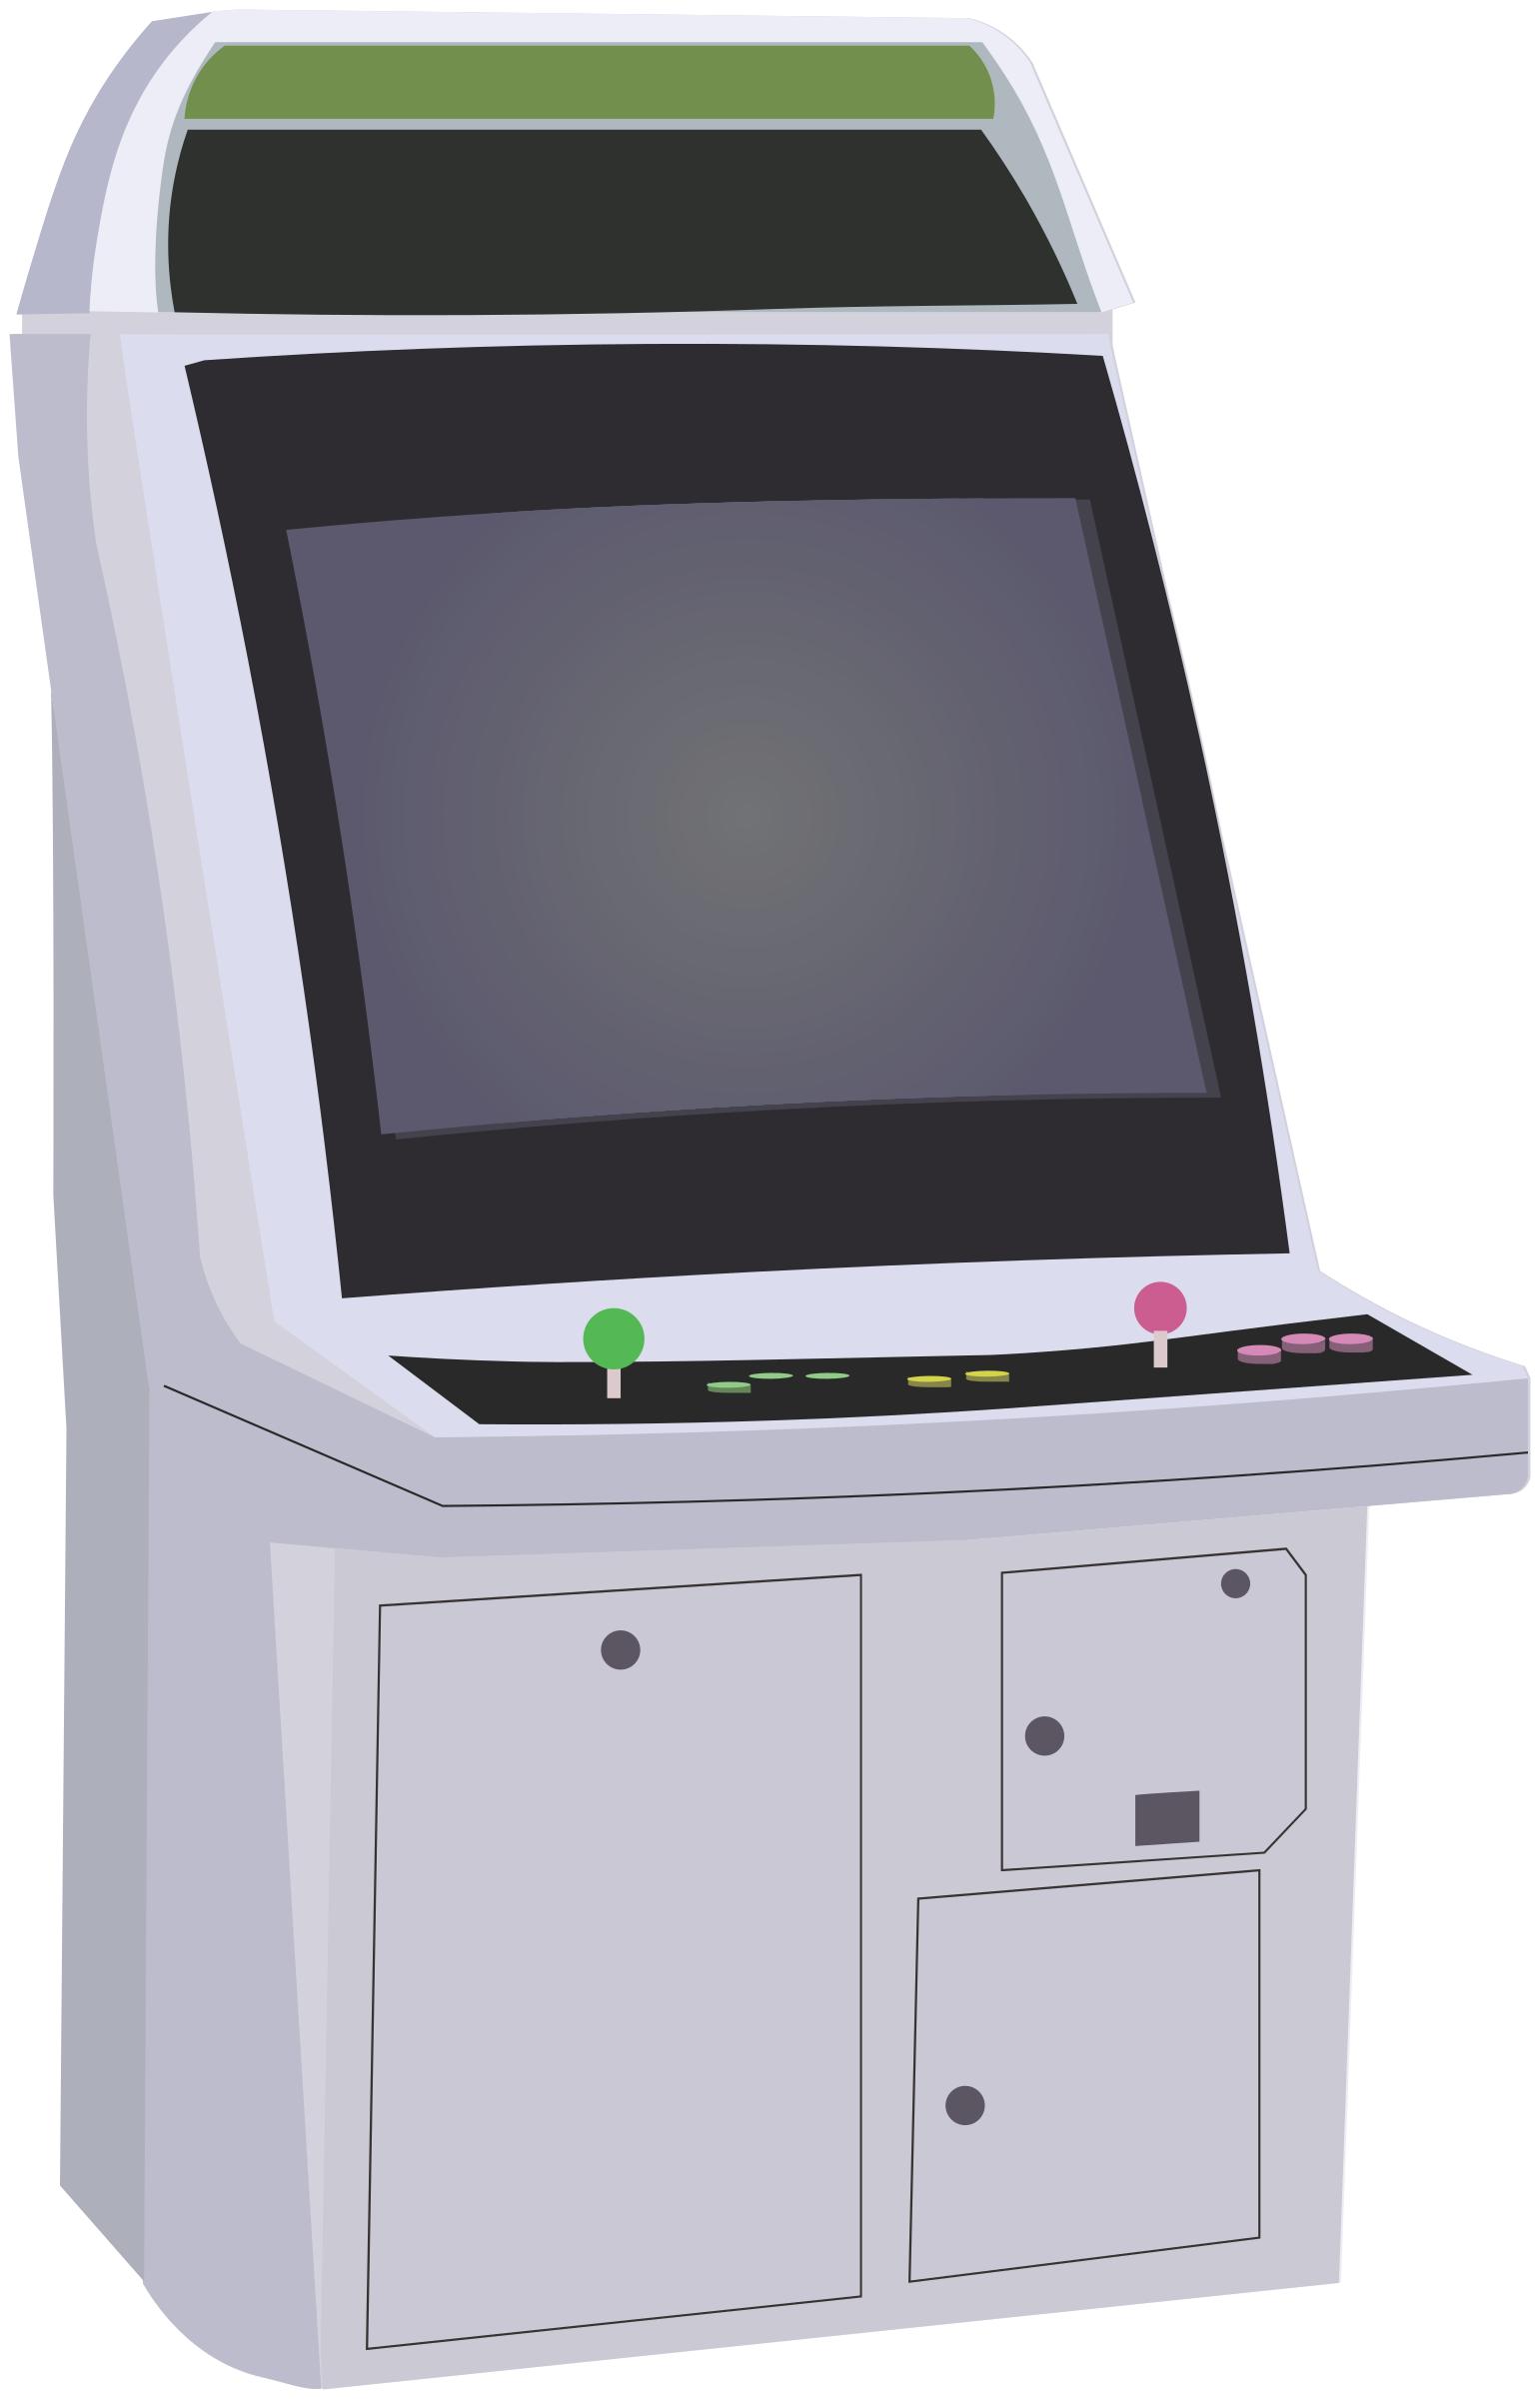 Arcade video game machine png